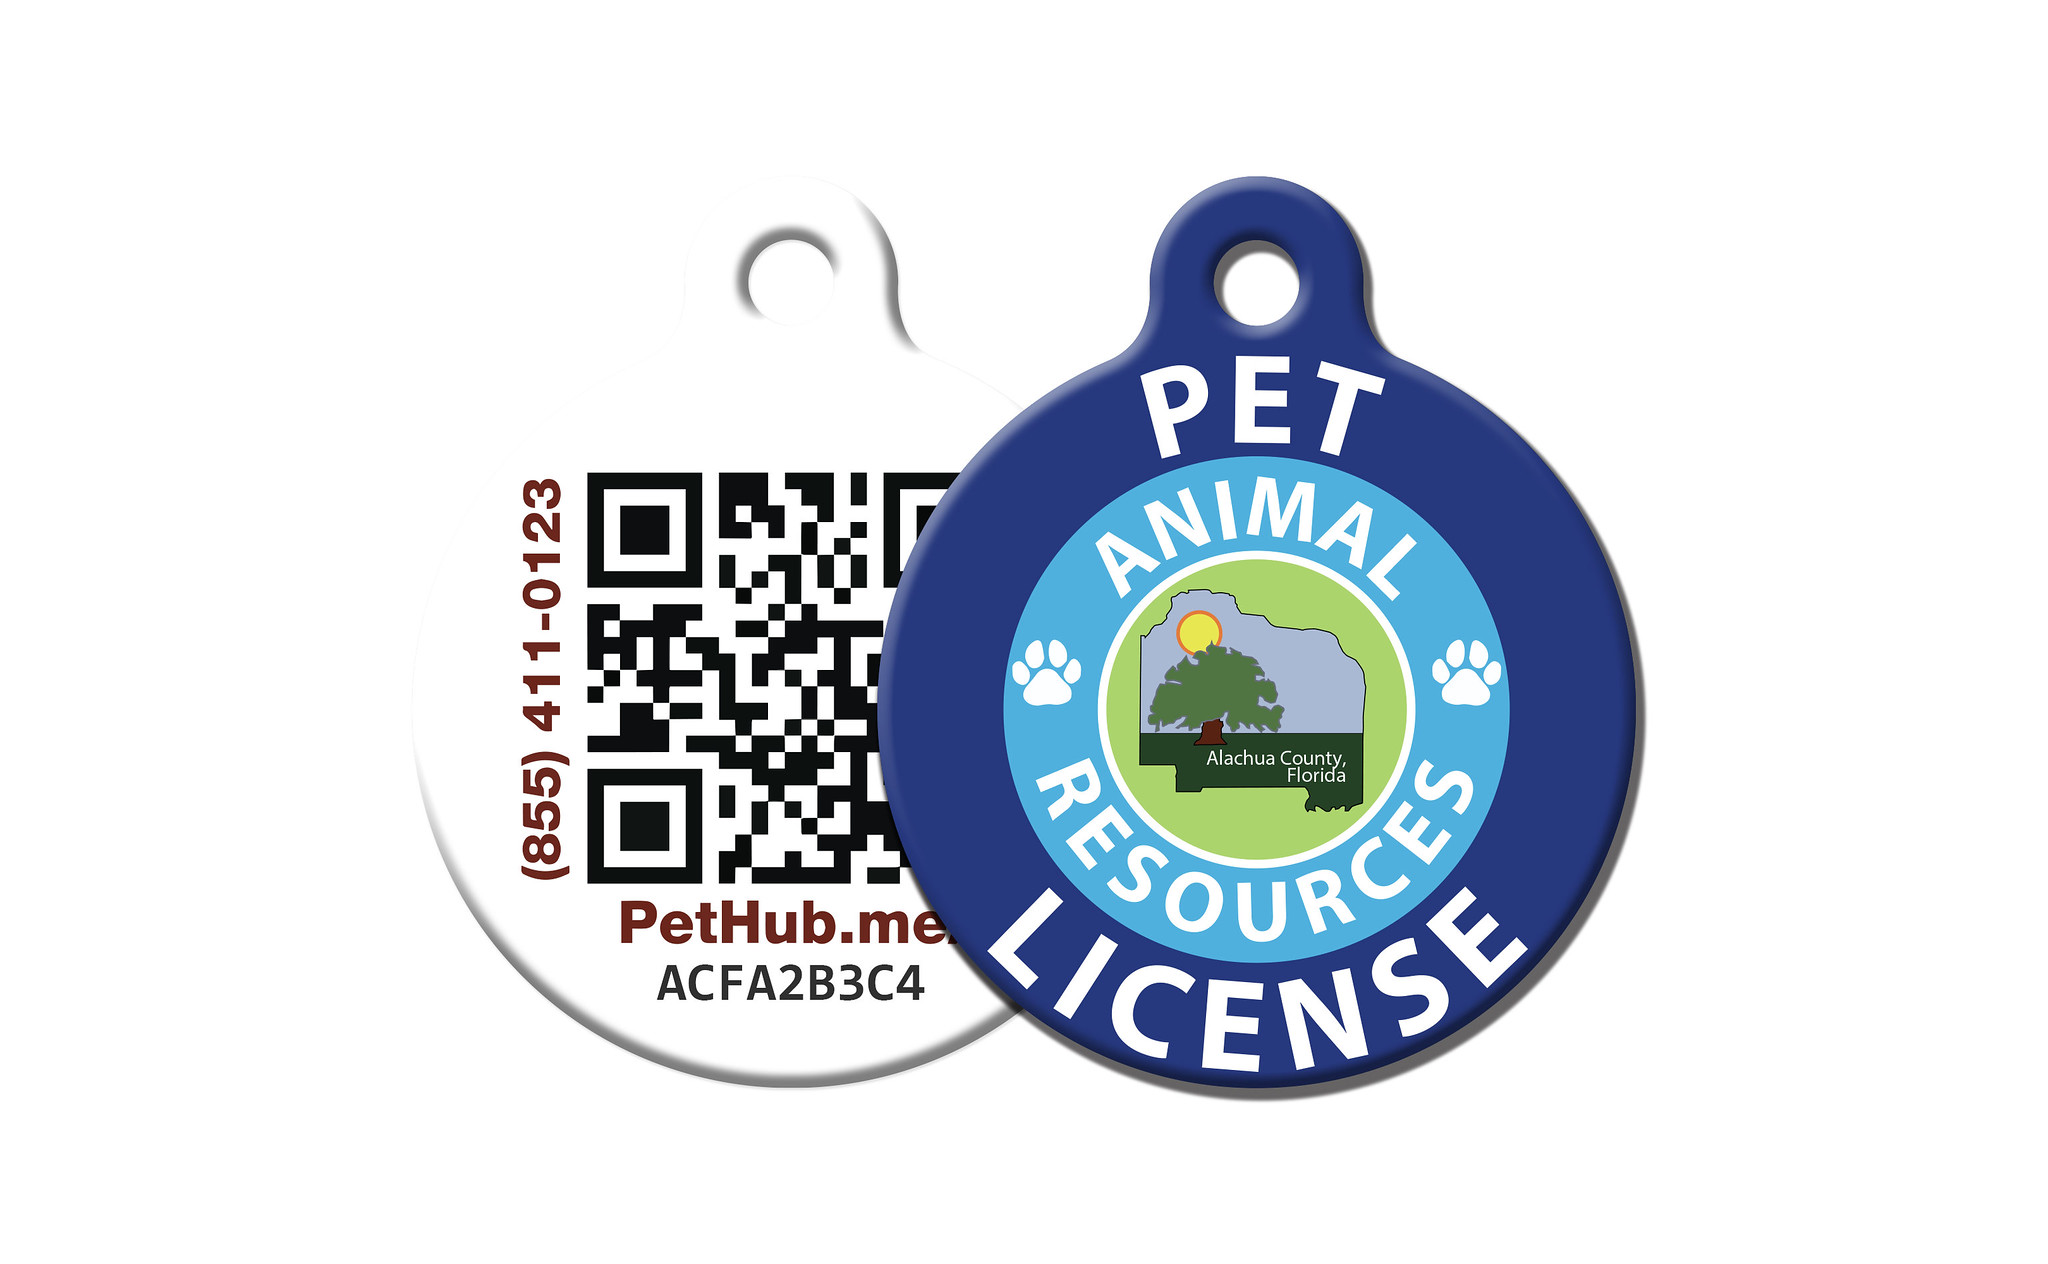 Pet License